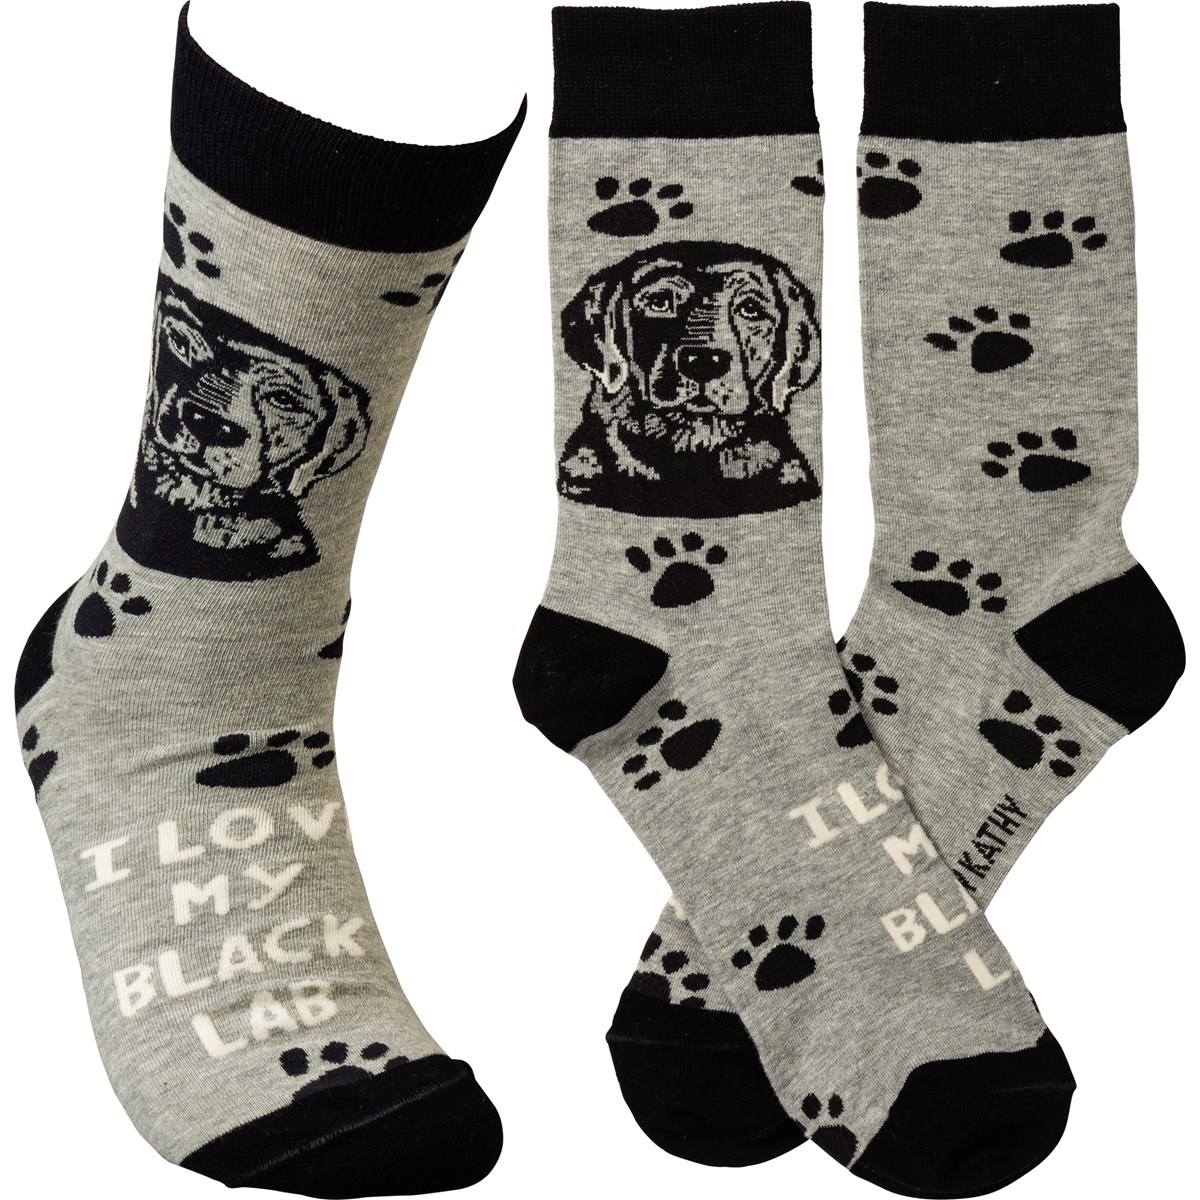 Socks - I Love My Black Lab - One Size Fits Most - Cotton, Nylon, Spandex